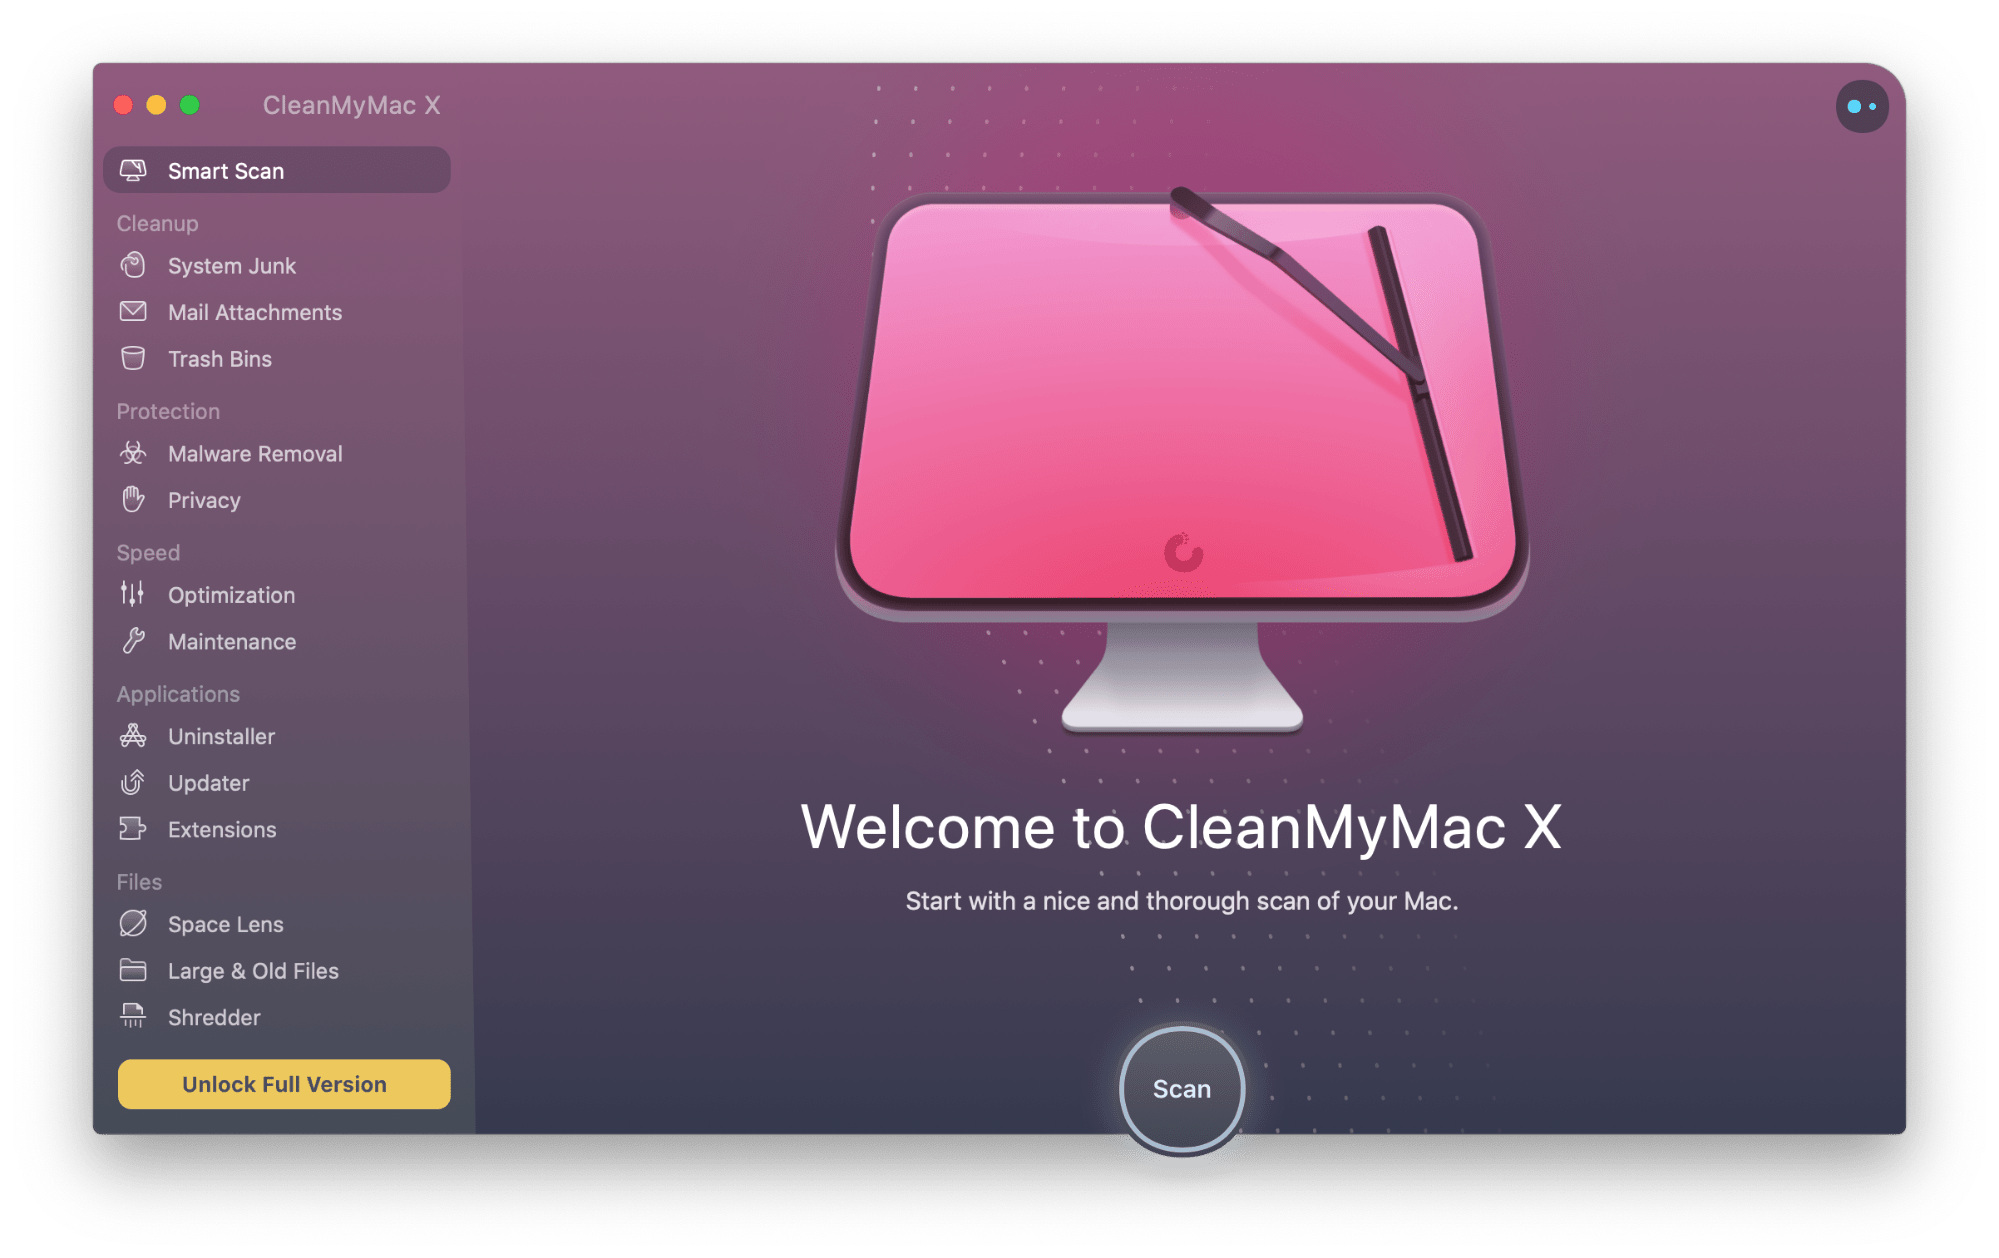 Cleanmymac app window showing welcome screen